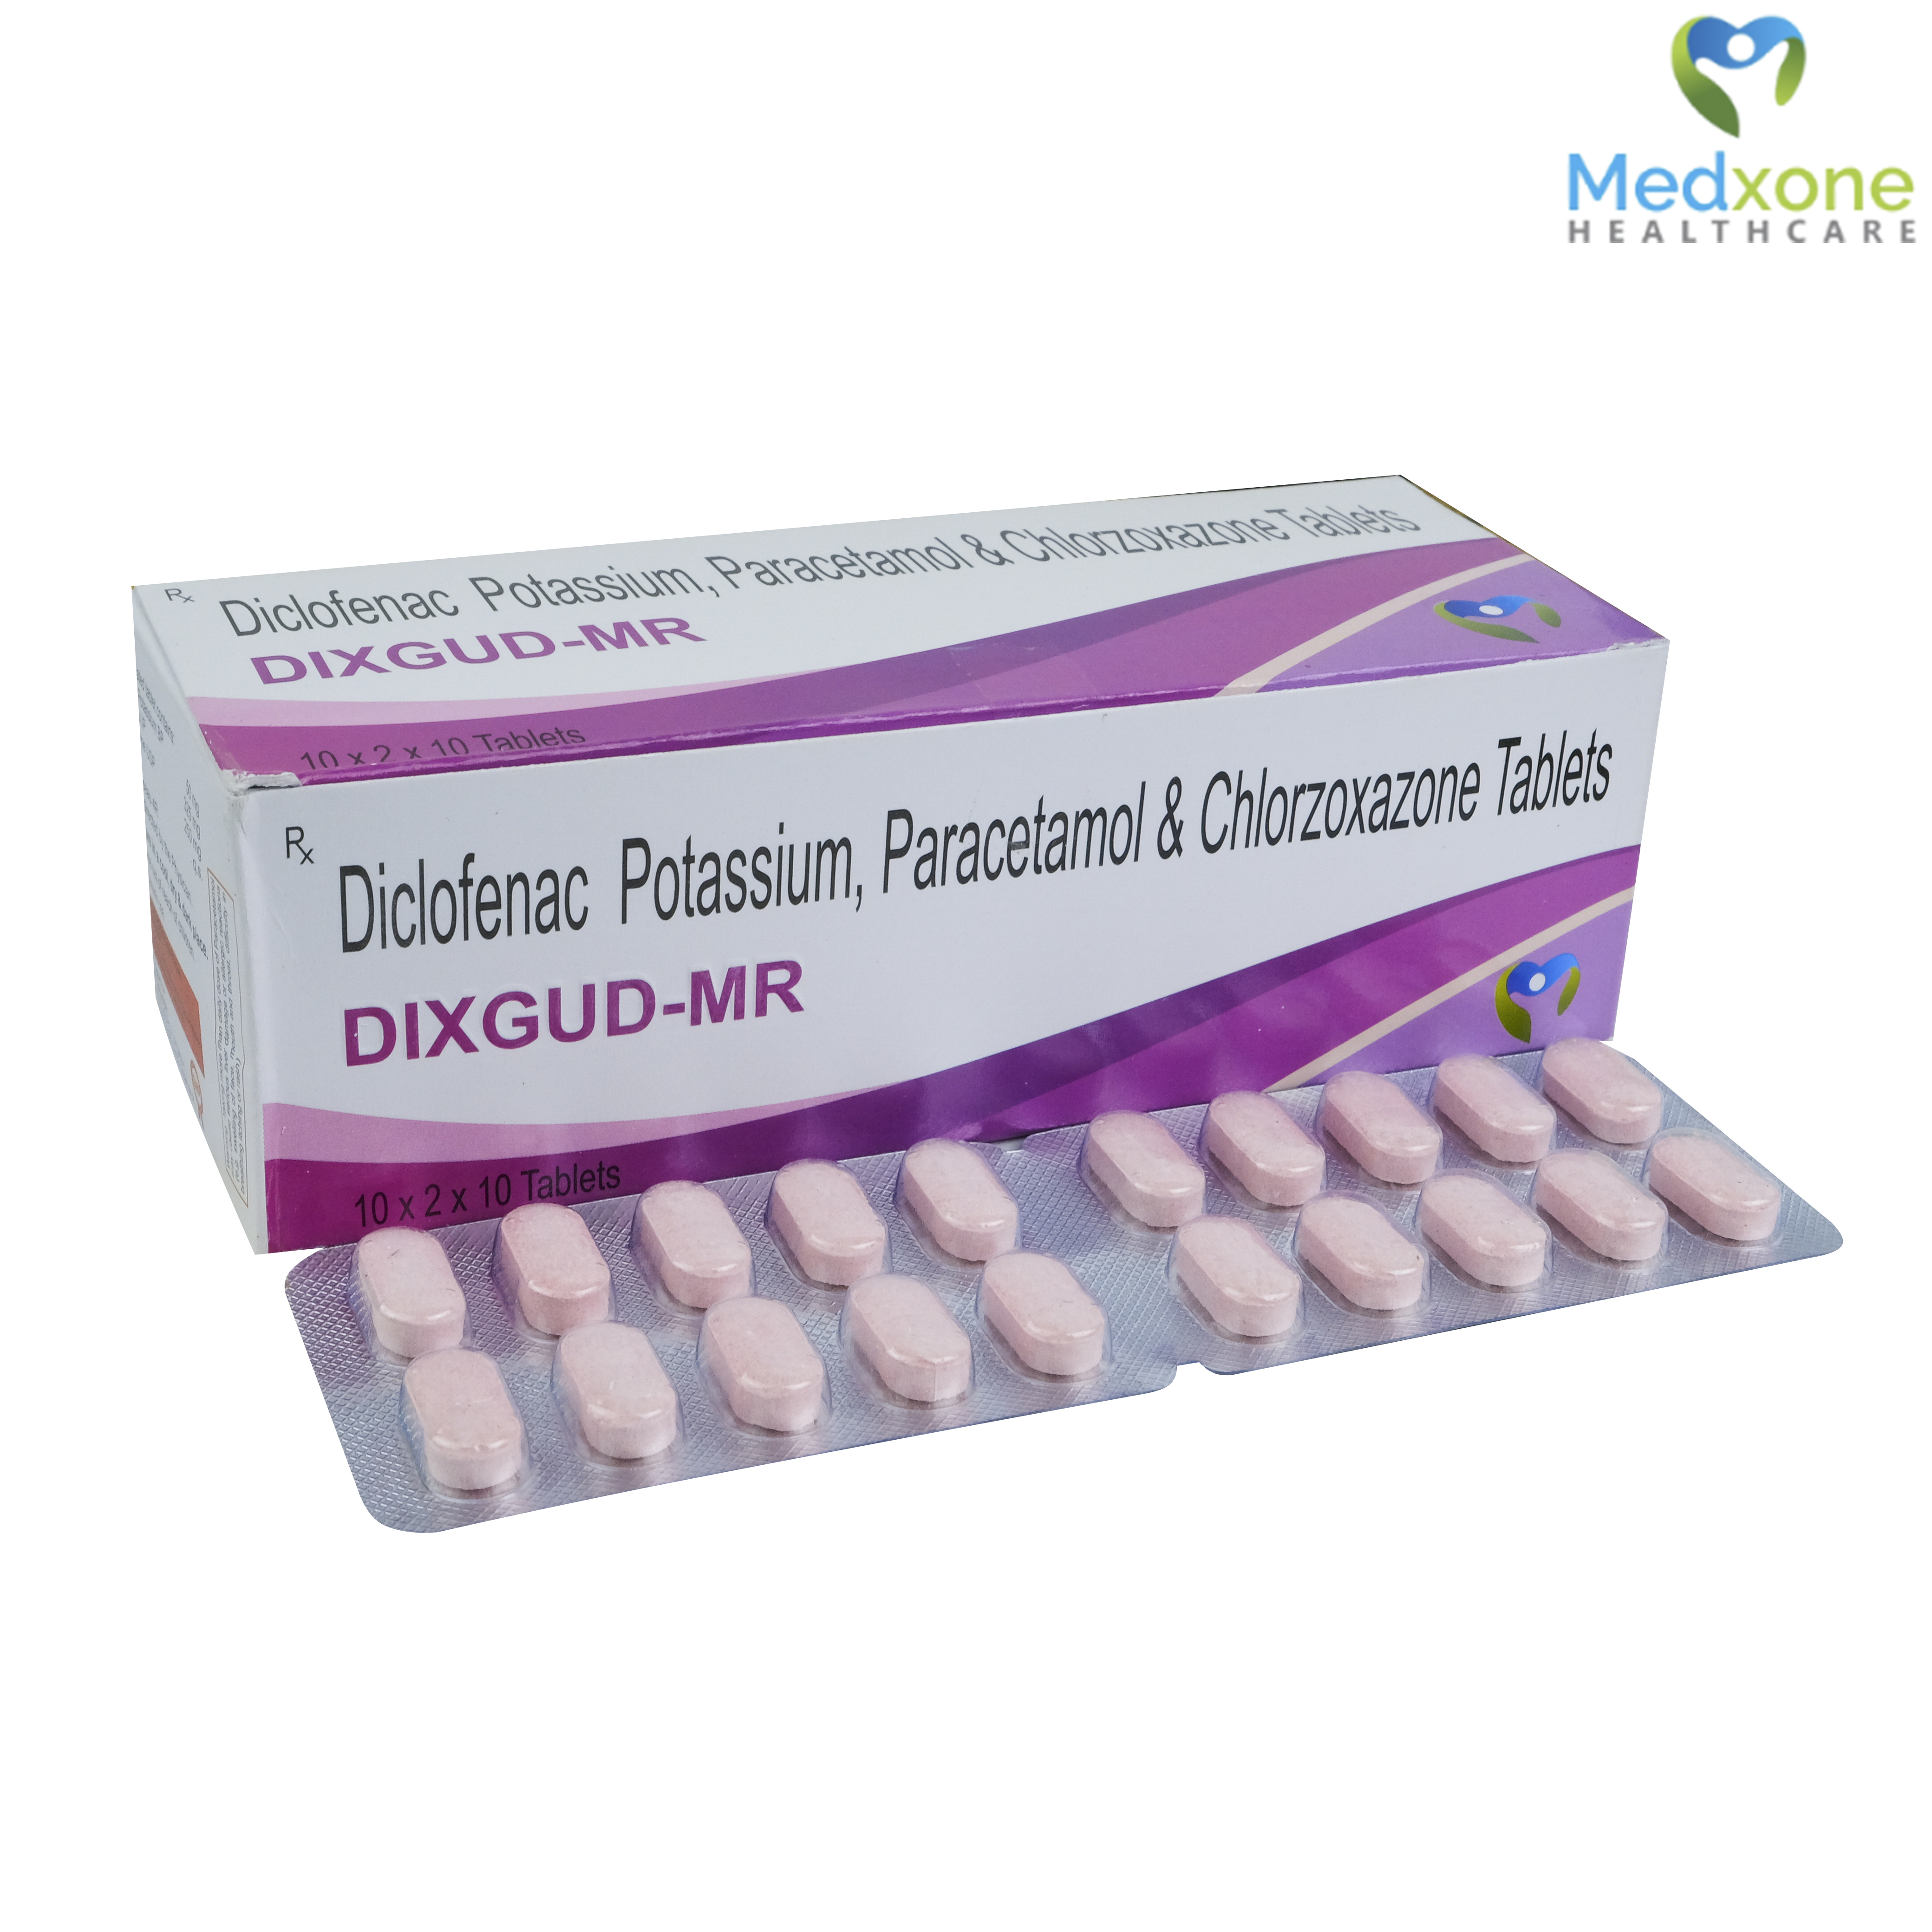 Diclofenac Potassium 50mg +Paracetamol 325mg + hlorozoxazone 250mg